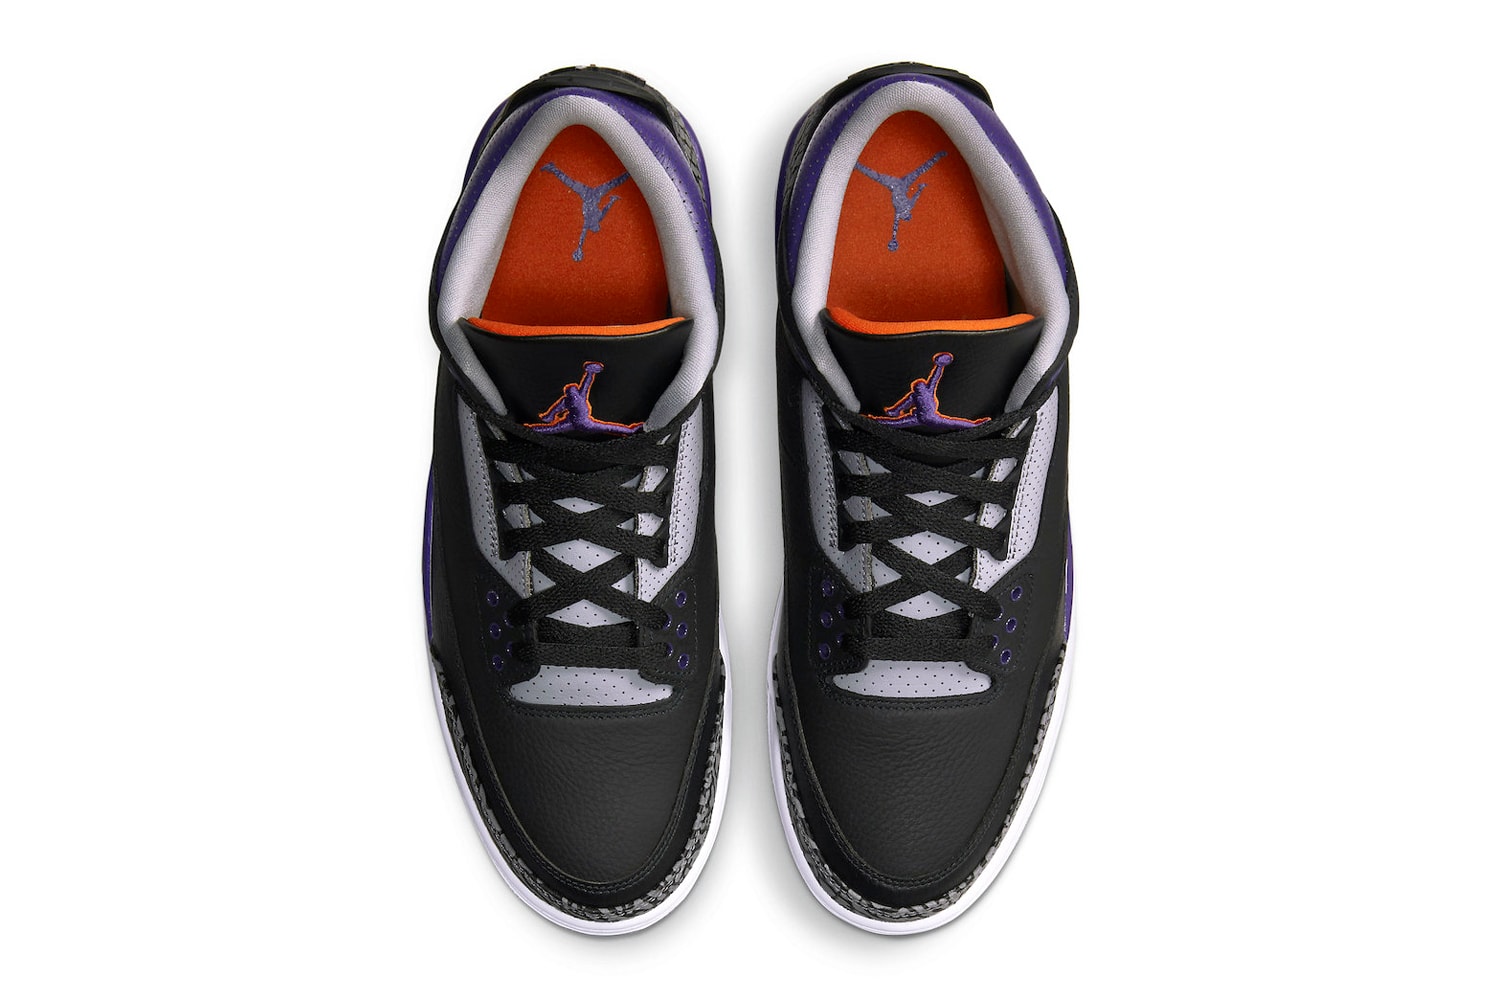 Air Jordan 3 Court Purple Release ct8532-050 Info Date buy Price Brand Black Cement Grey White Court Purple Phoenix Suns